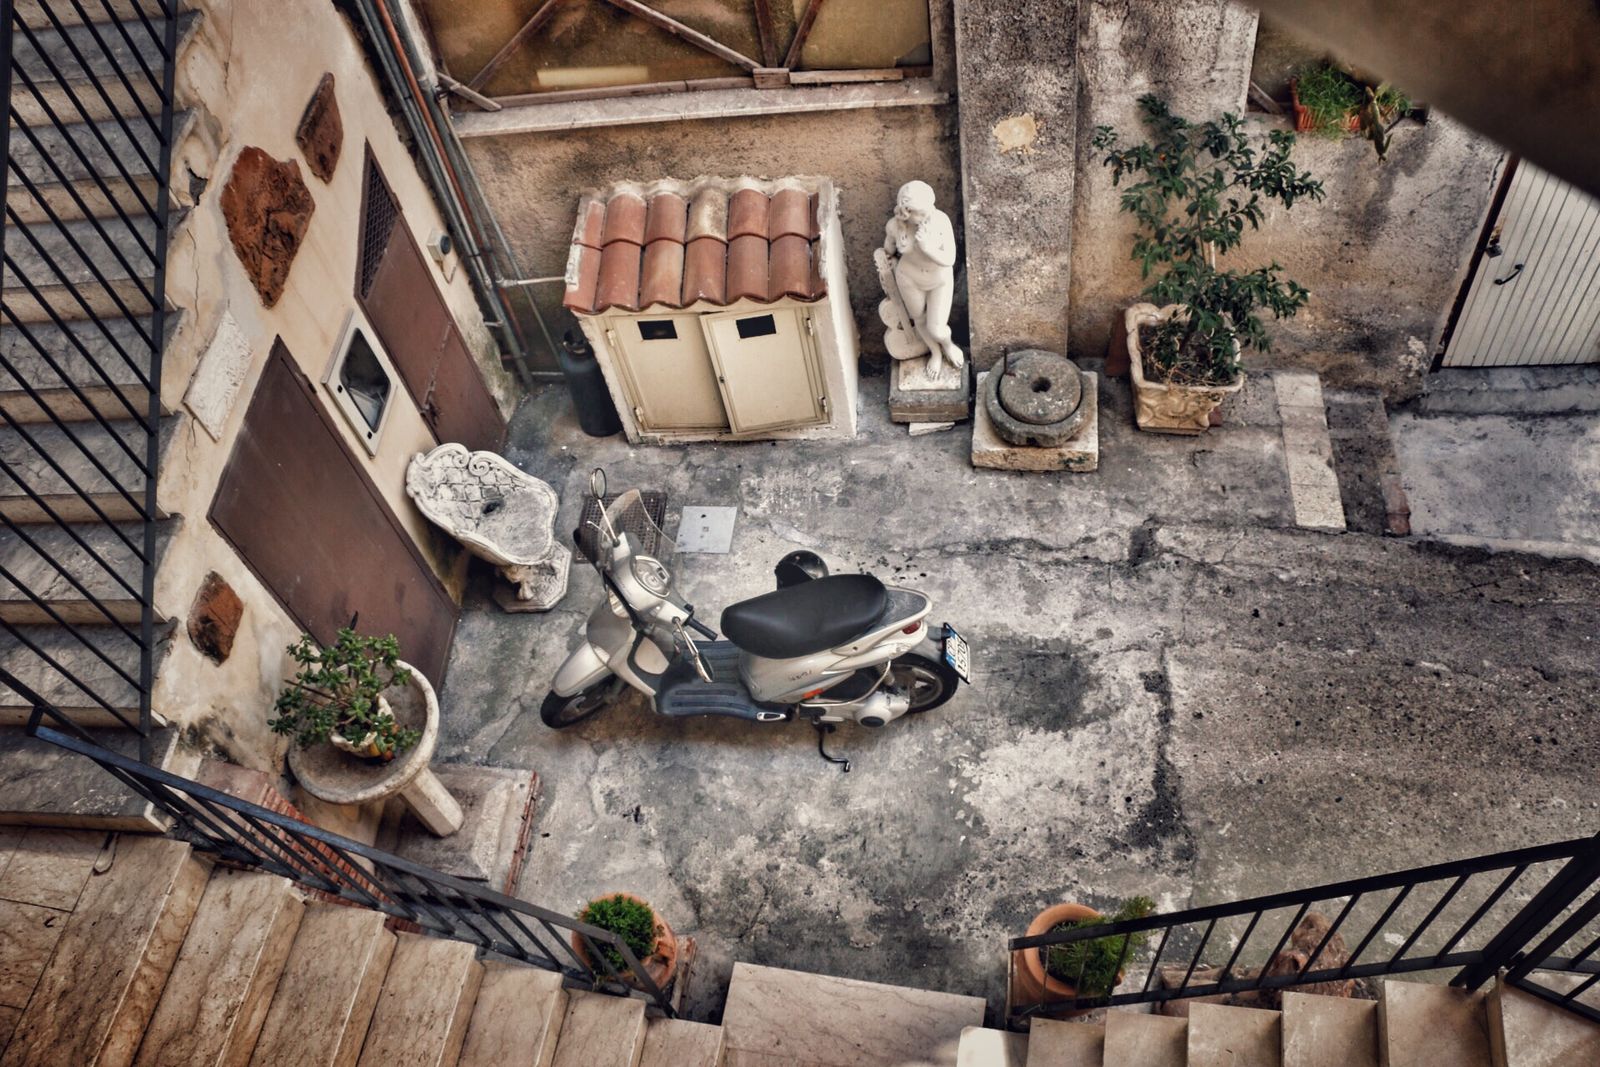 © Iffat Nawaz - Everyone had left the courtyard yet no one did. Taormina, Italy